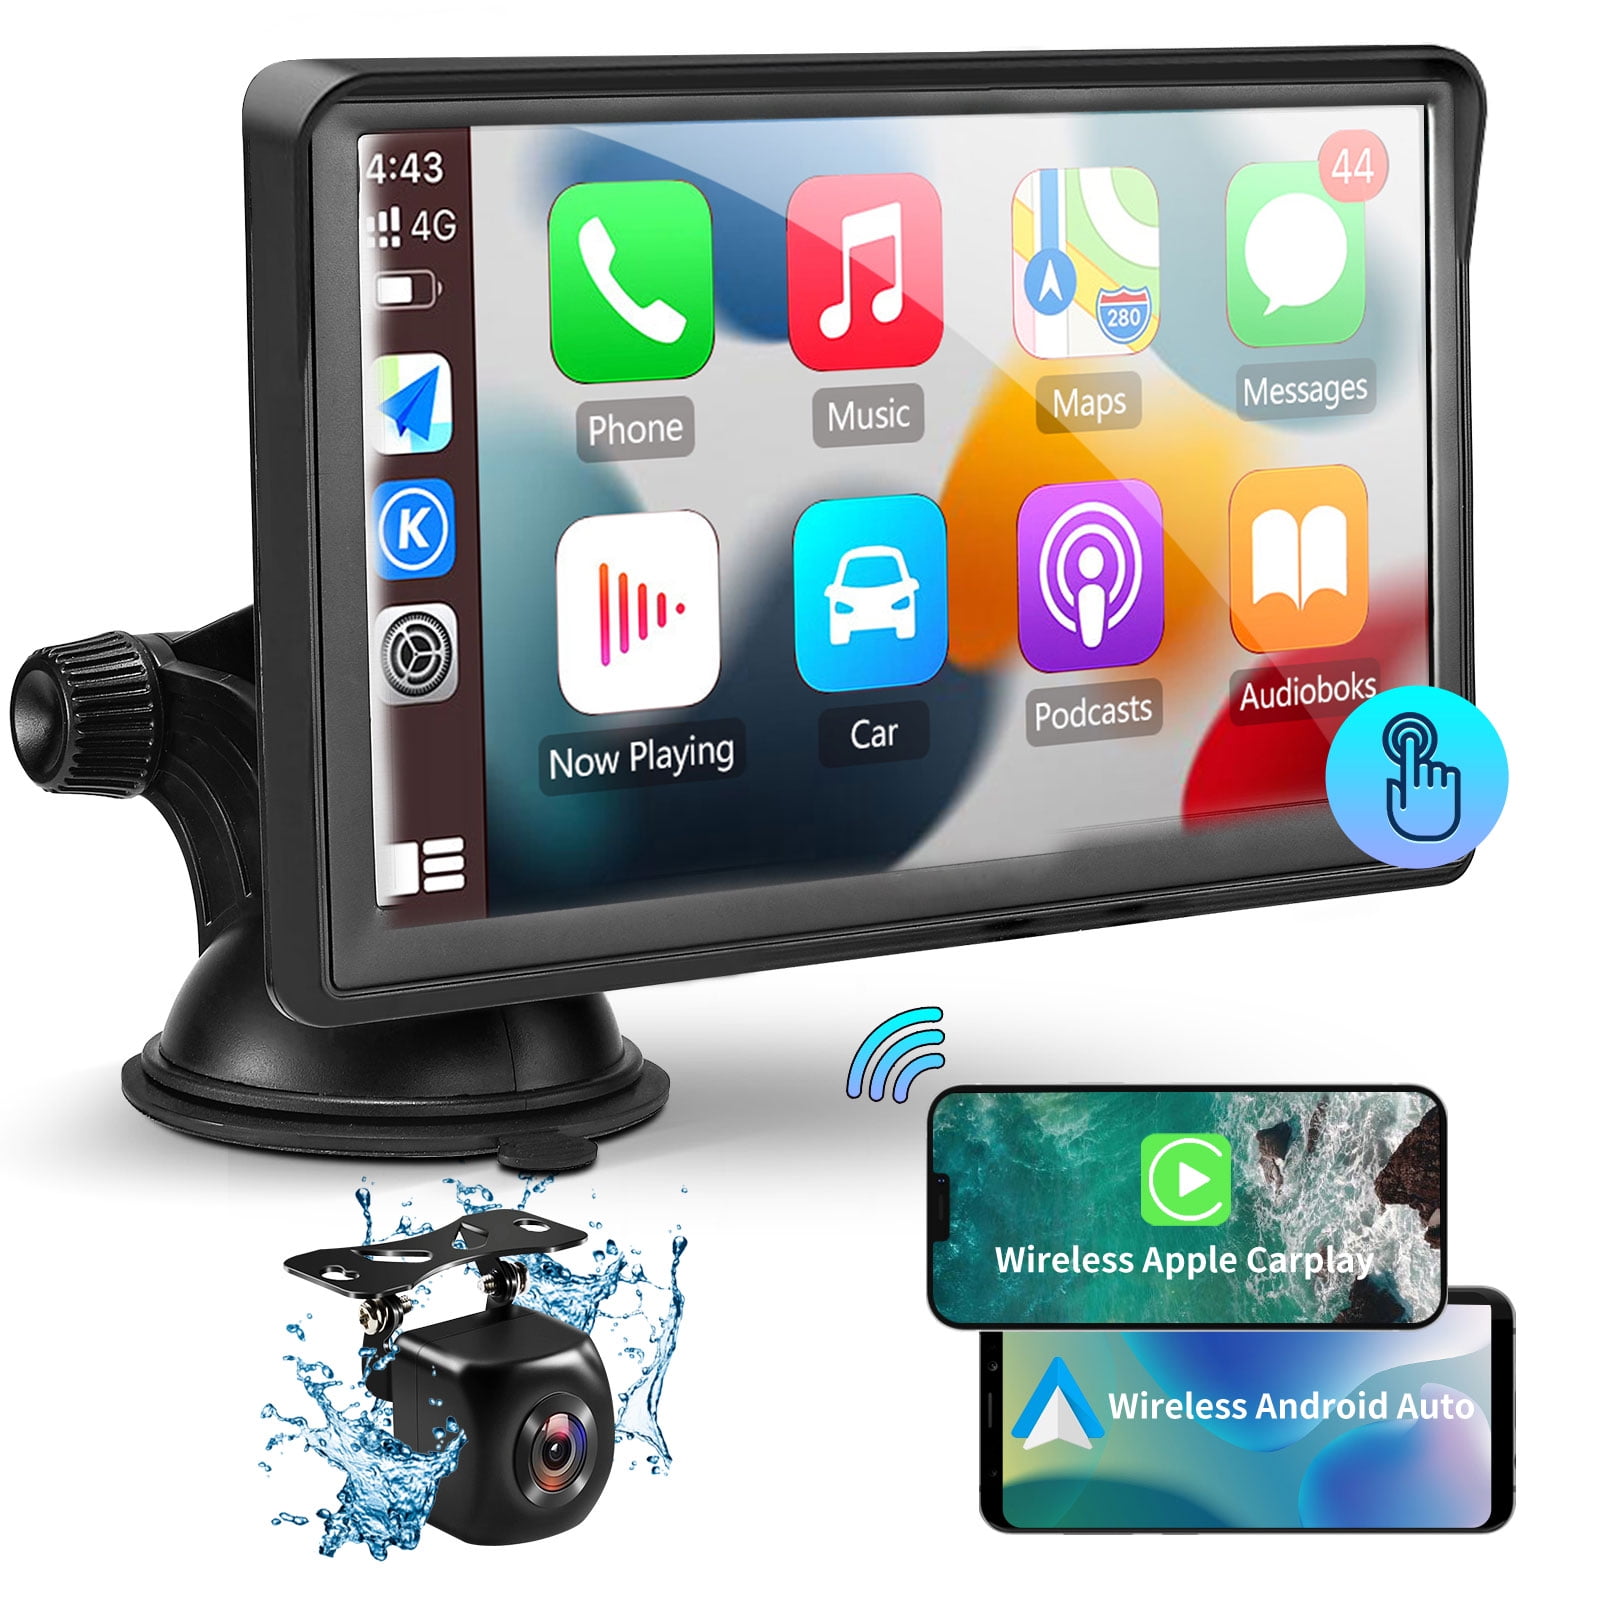 7-inch Touchscreen Wireless Car Stereo, Portable Car Radio